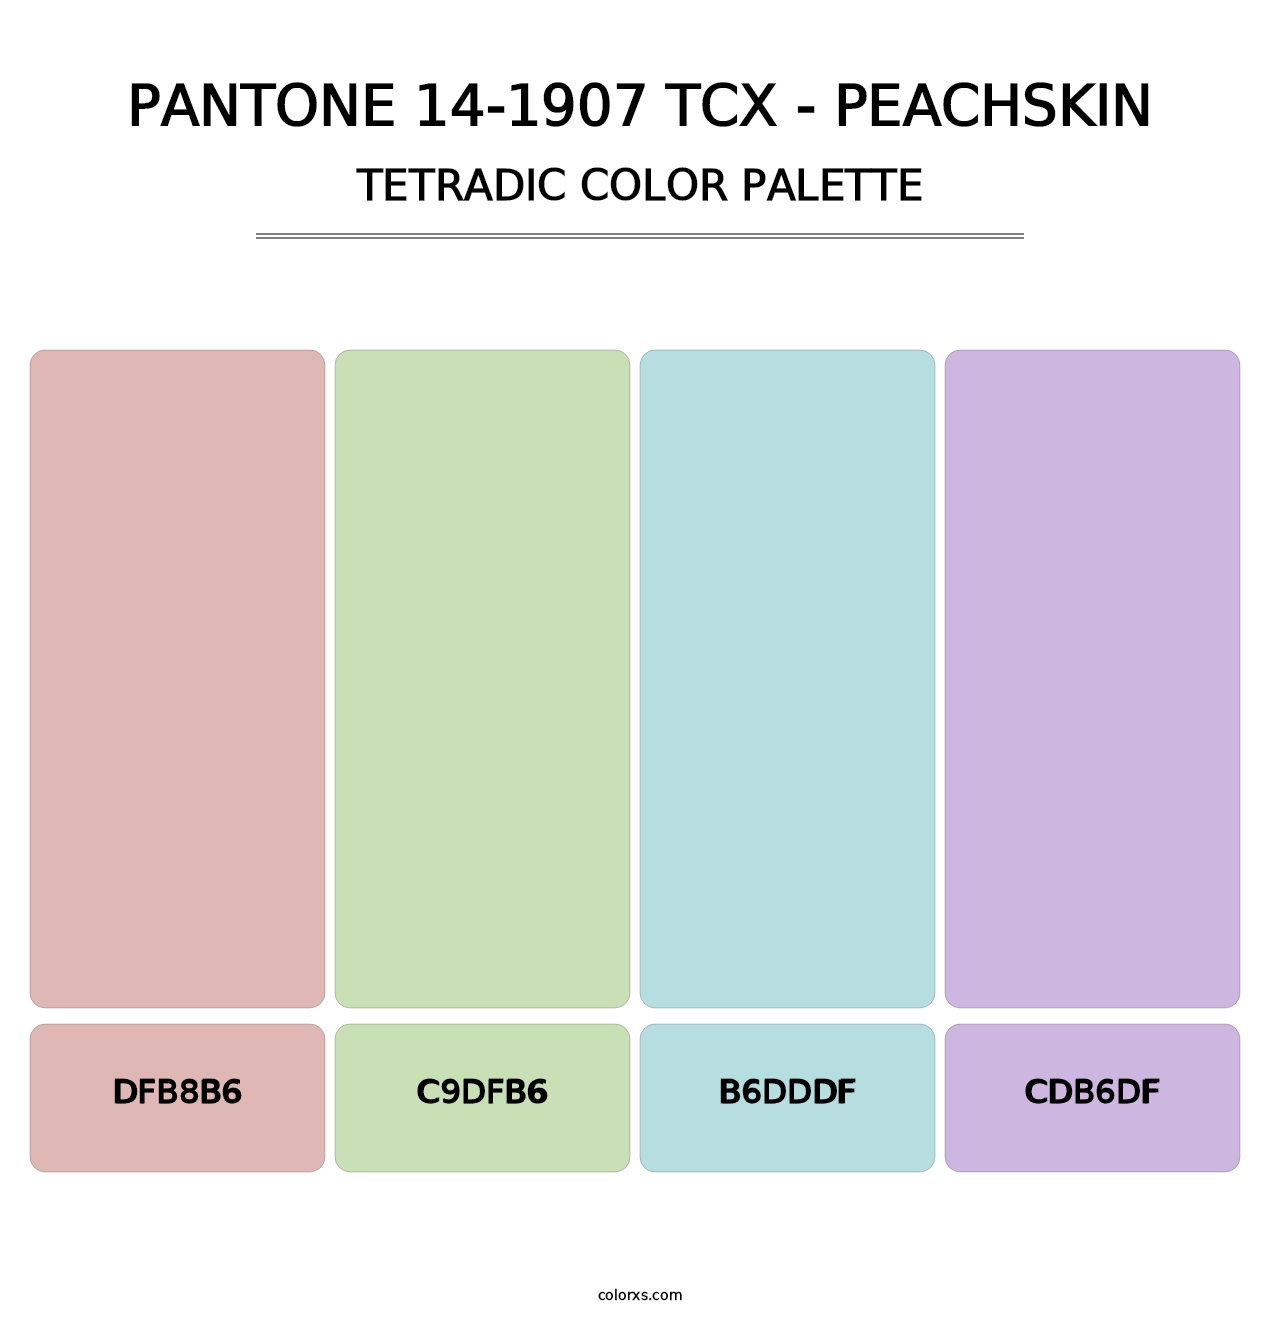 PANTONE 14-1907 TCX - Peachskin - Tetradic Color Palette